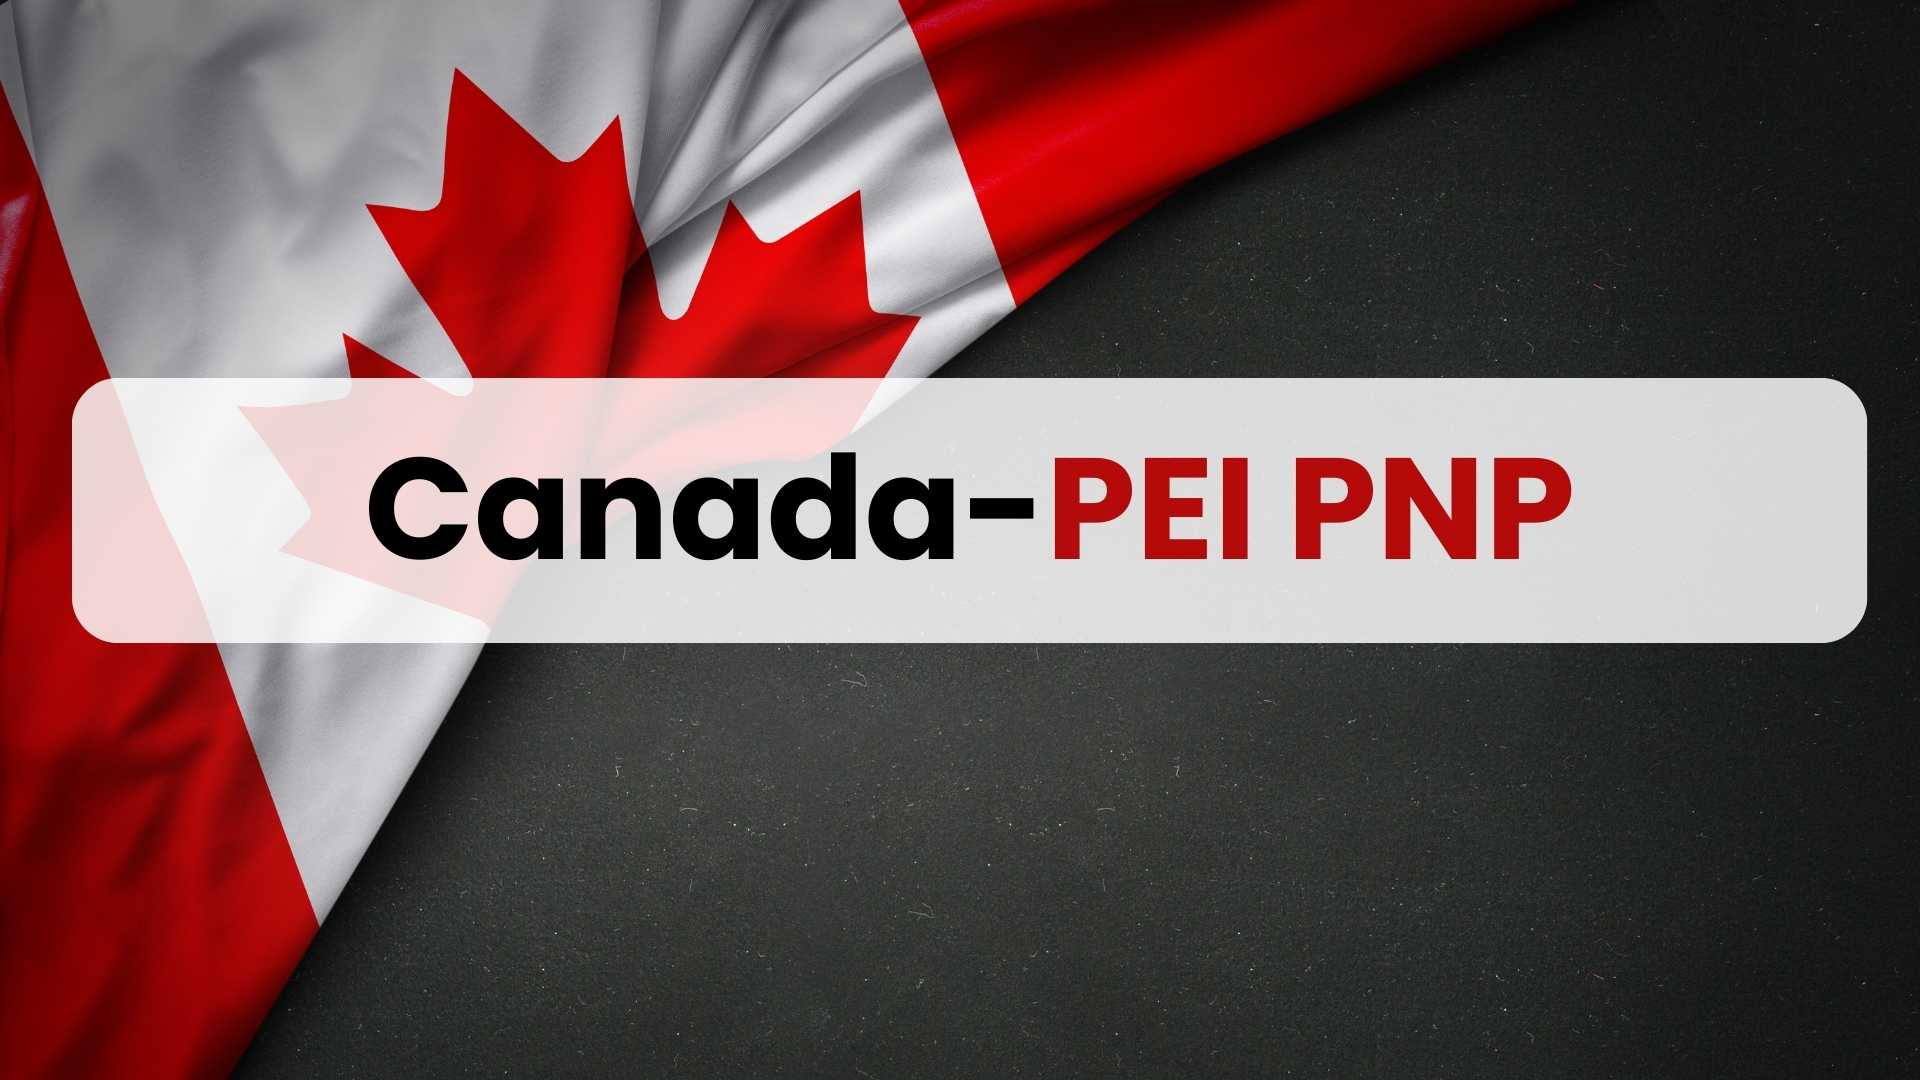 Canada-PEI PNP (Prince Edward Island Provincial Nominee Program)